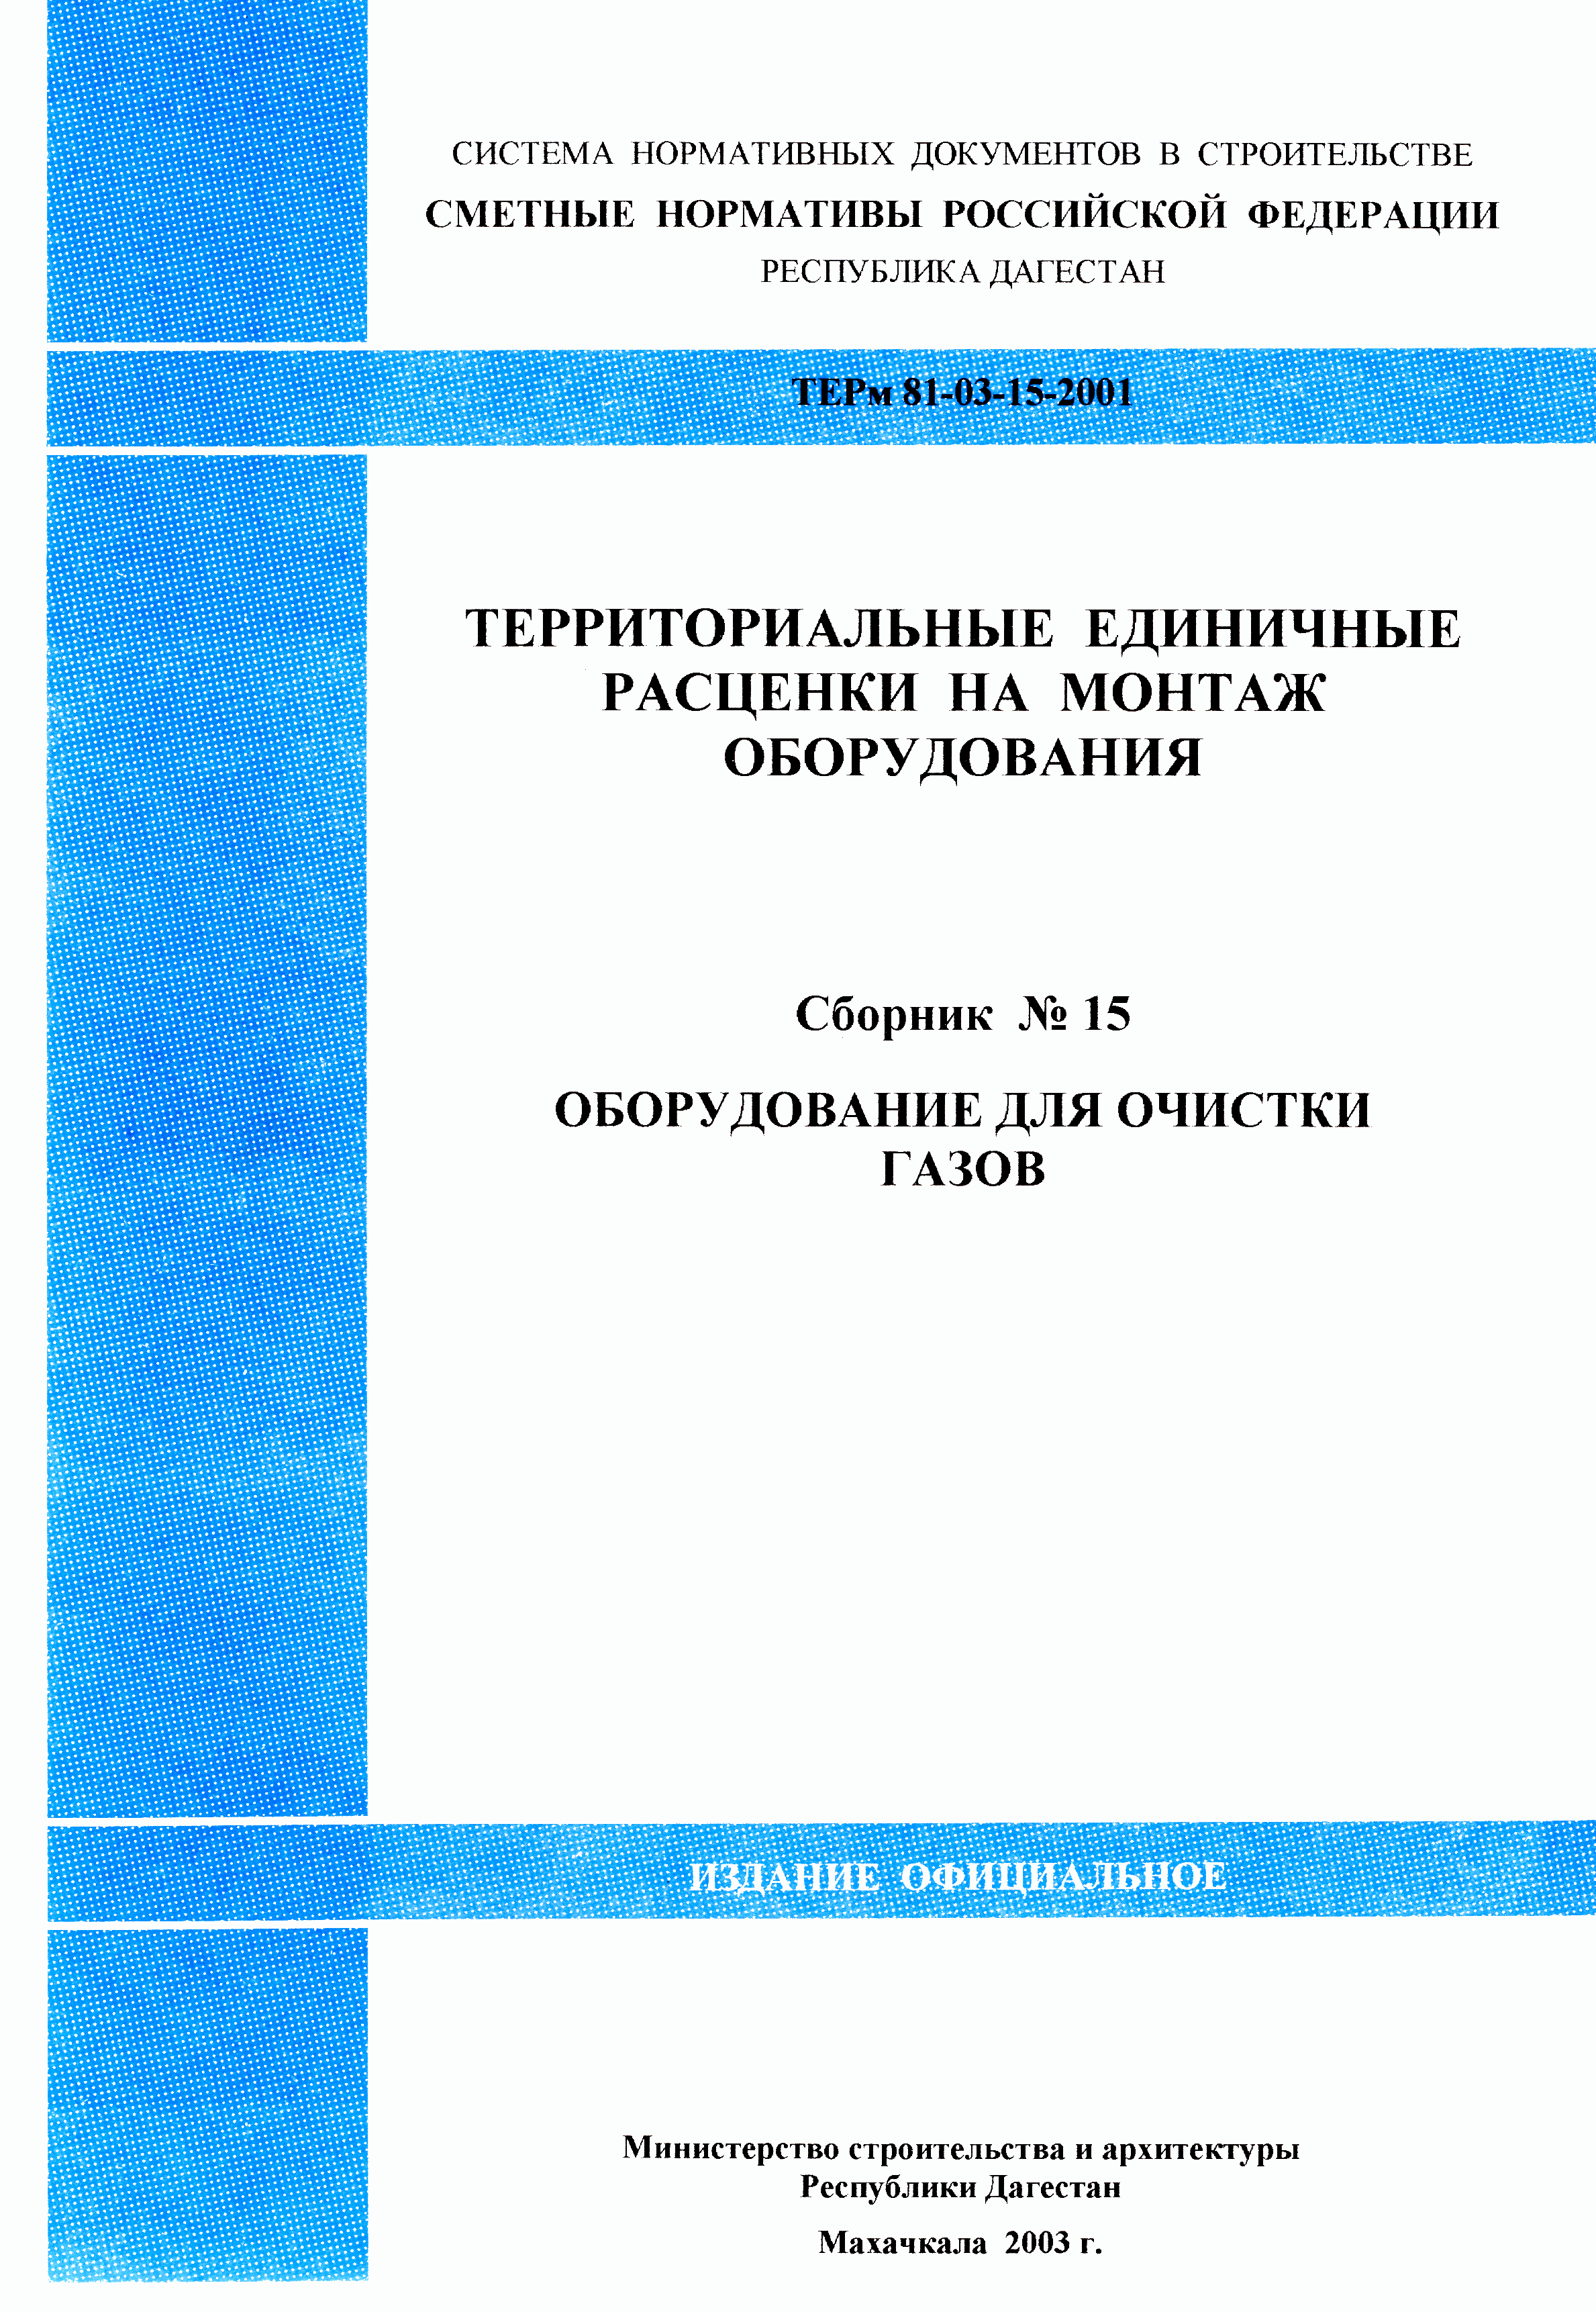 ТЕРм Республика Дагестан 2001-15